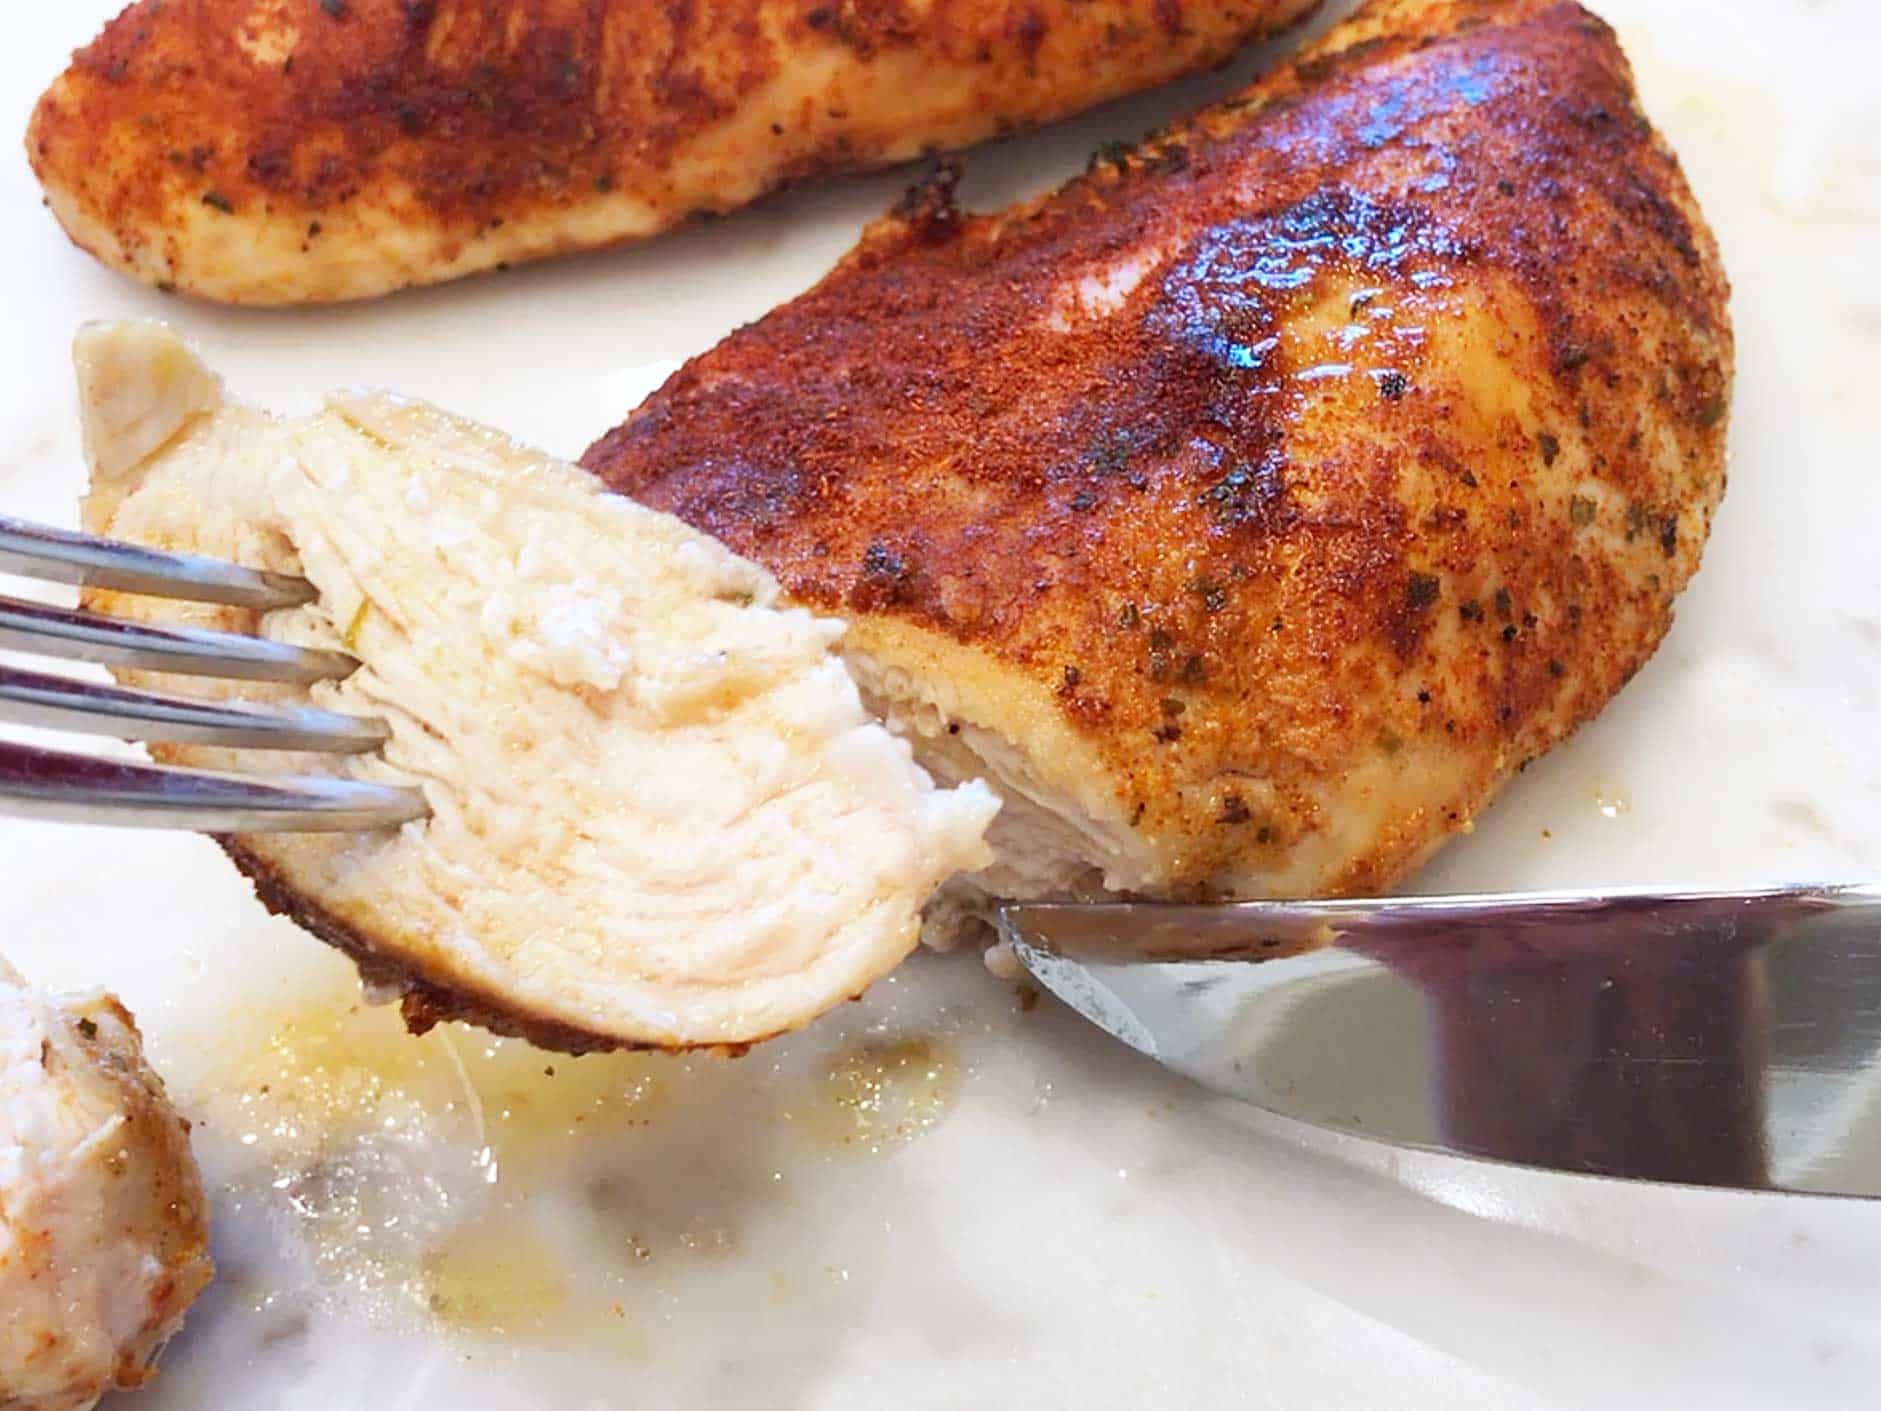 Juicy Baked Chicken Breast - Healthy Recipes Blog